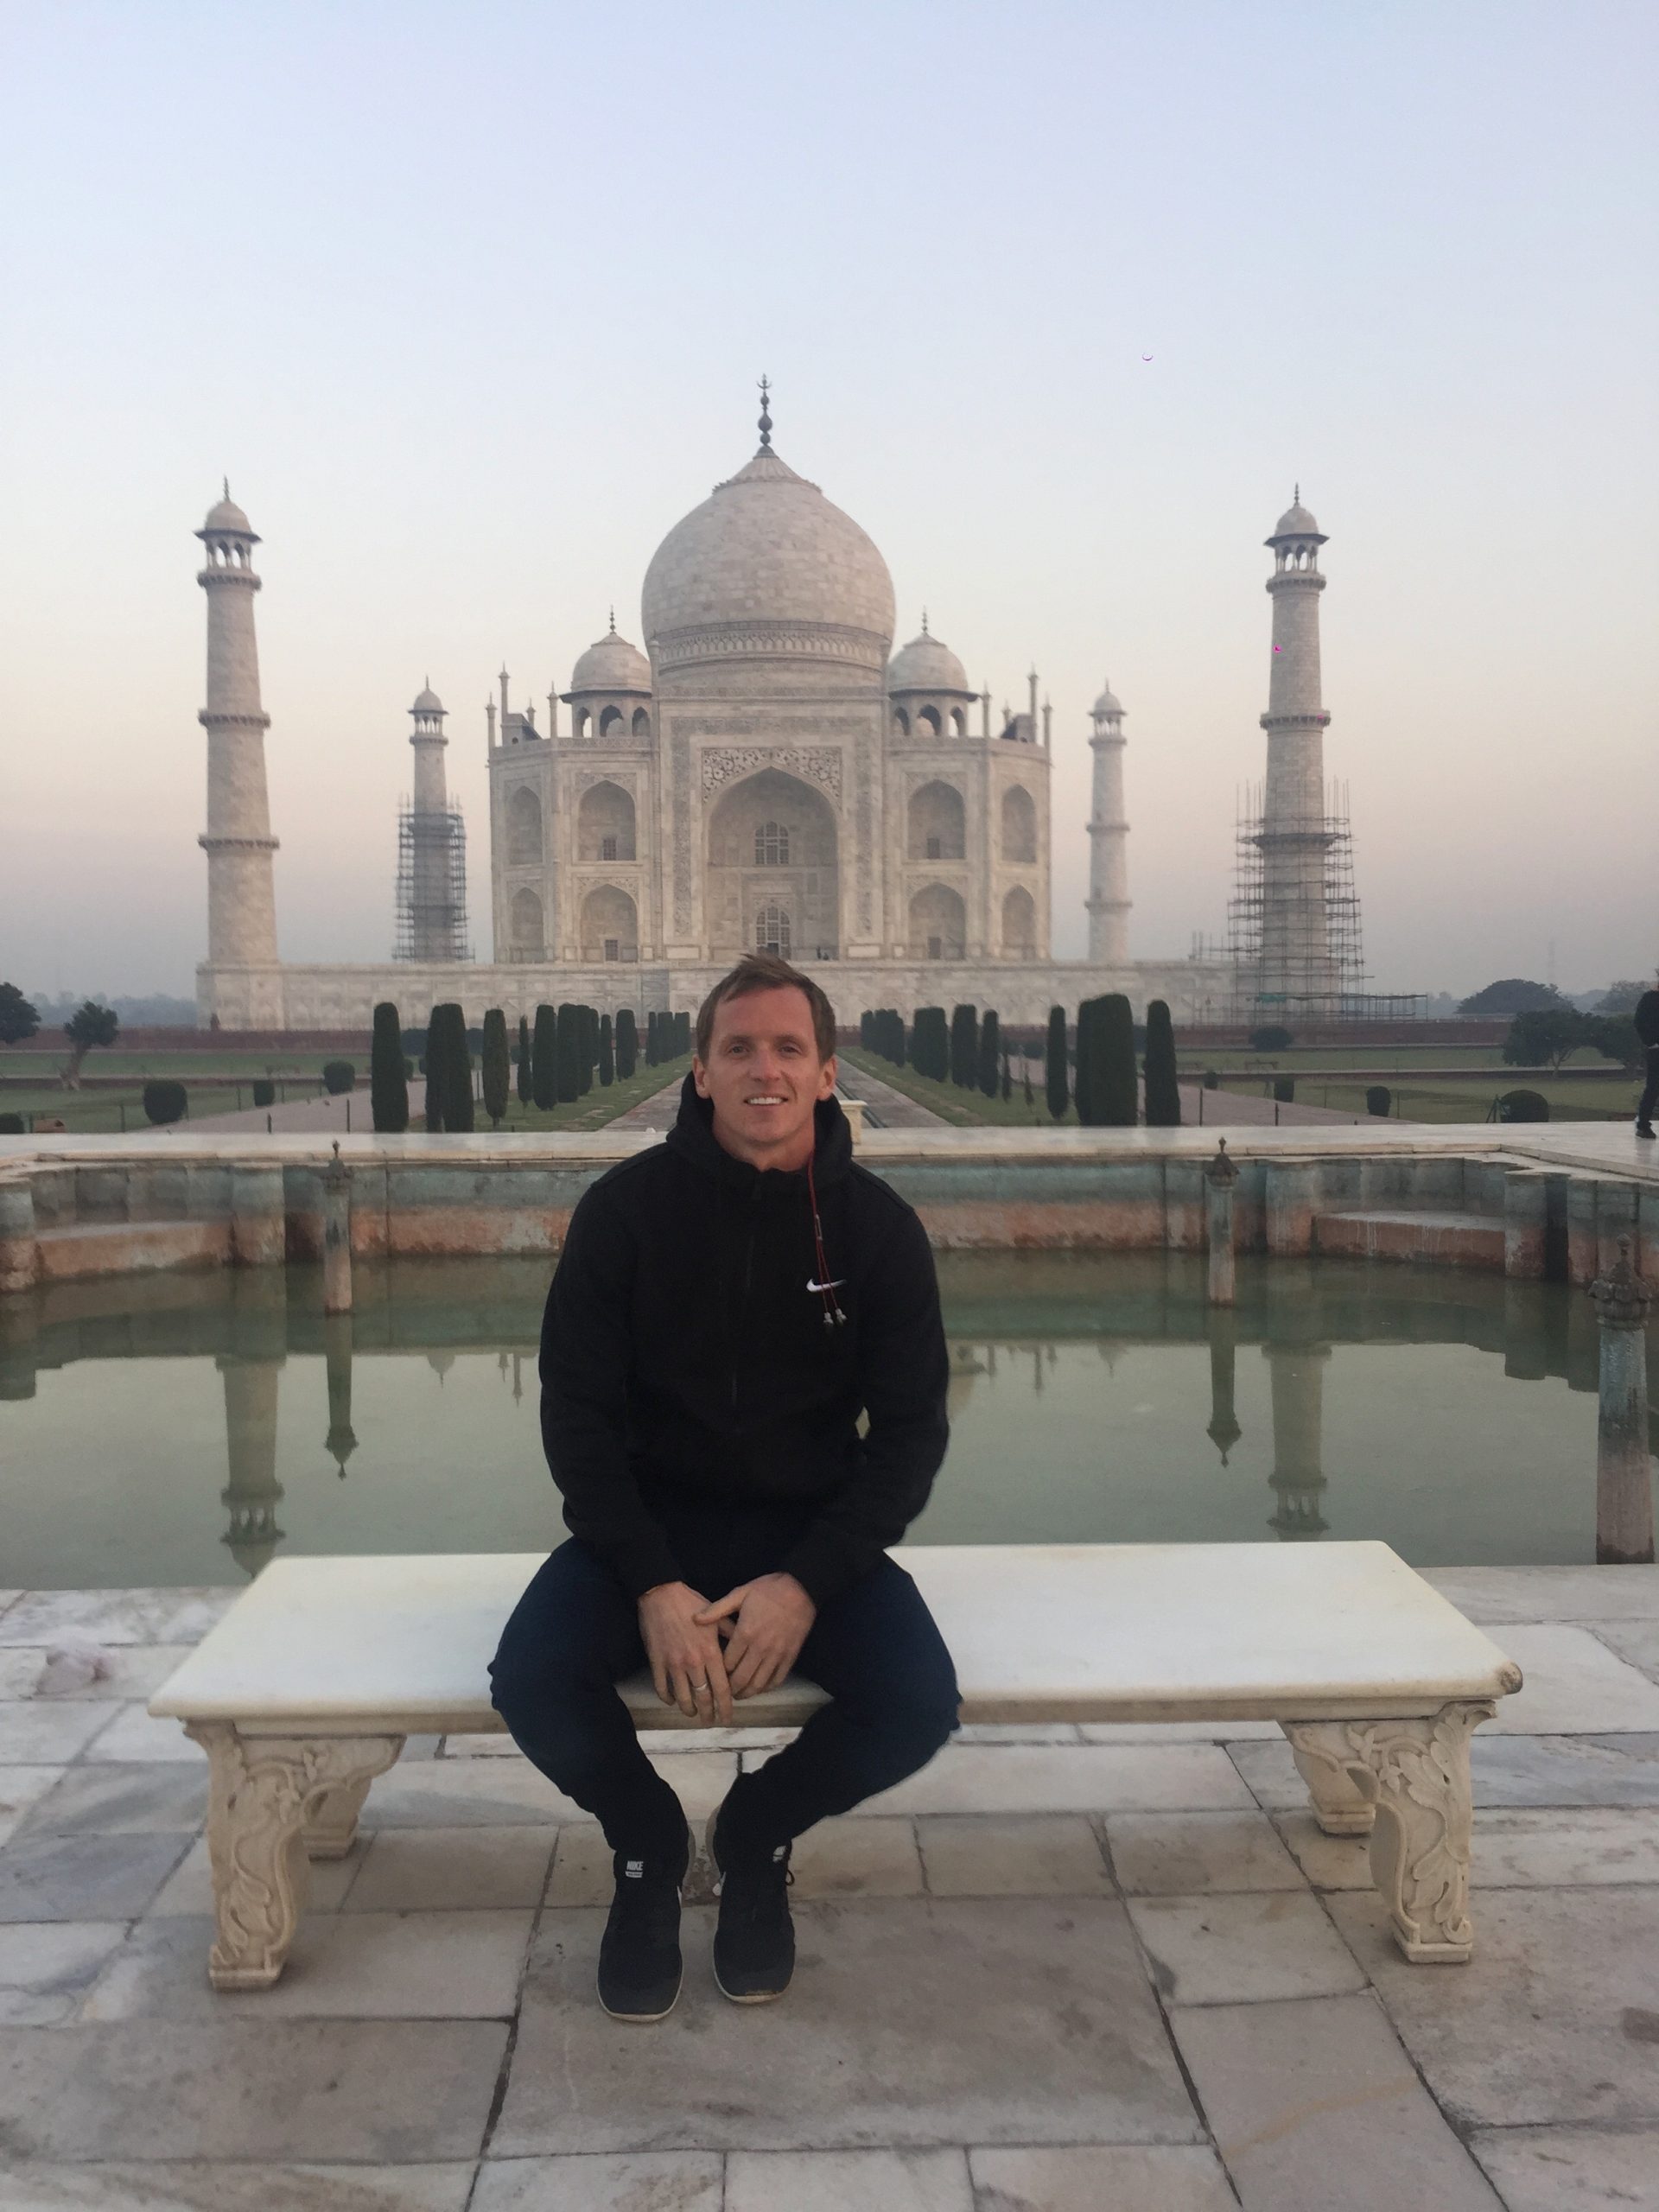 David Simpson and the Taj Mahal in India. All alone at the Taj Mahal